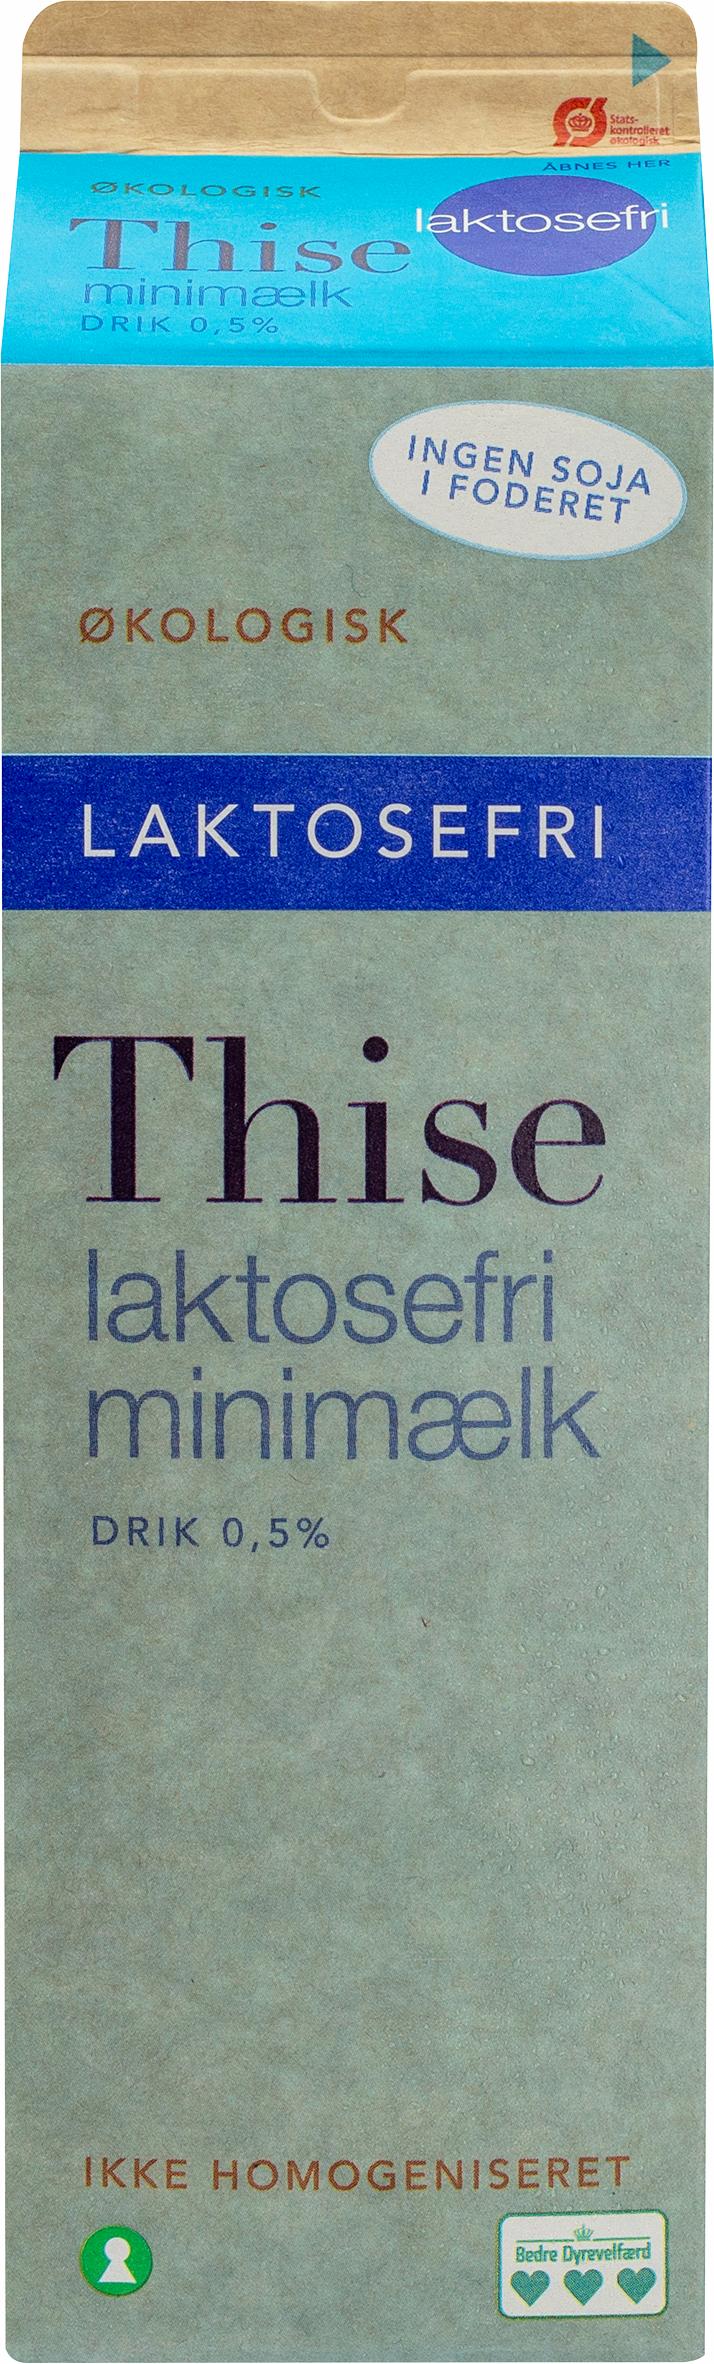 Thise Laktosefri Minimælk drik 0,5% 1L